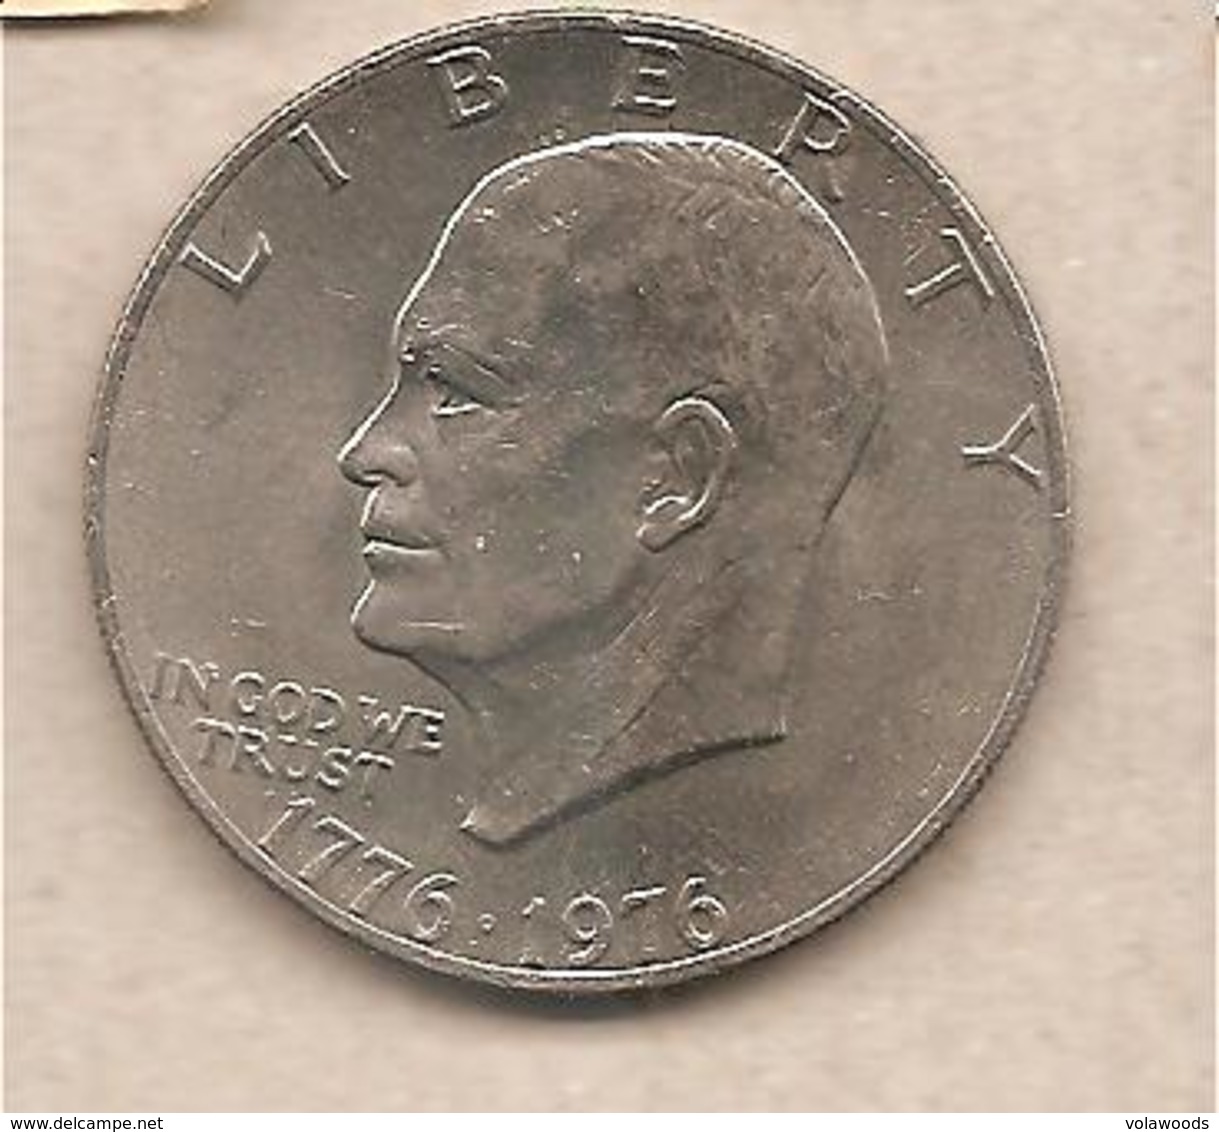 USA - Moneta Circolata Da 1 Dollaro - 1976 - 1971-1978: Eisenhower